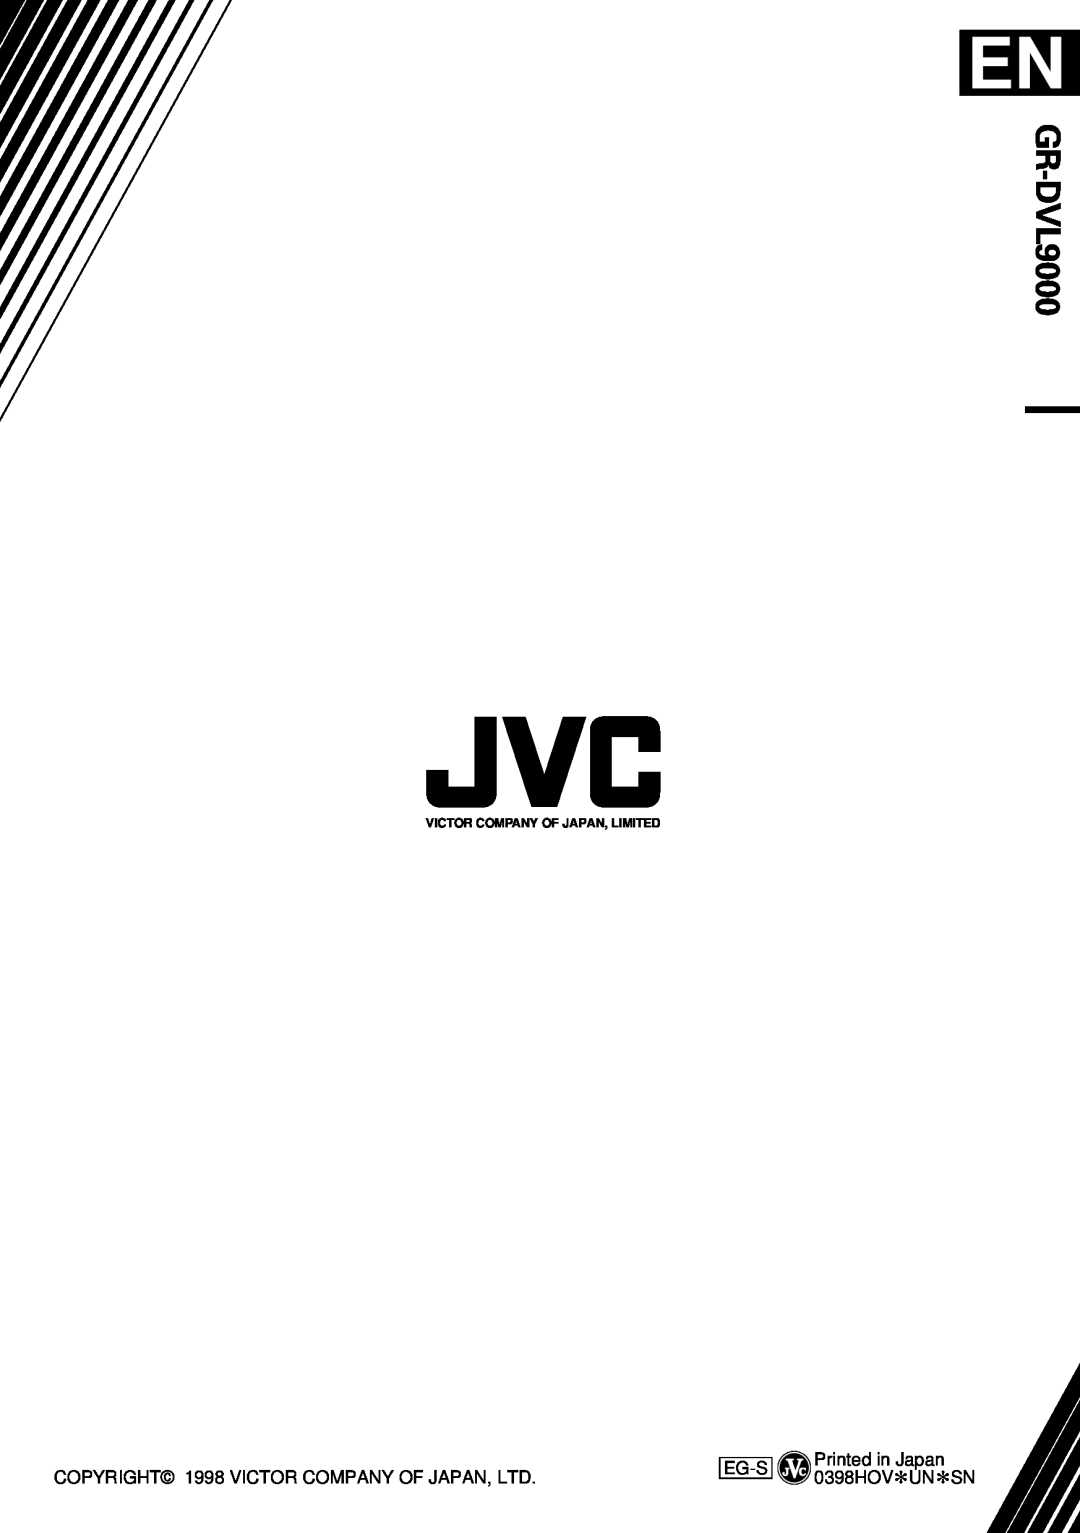 JVC GR-DVL9000 manual COPYRIGHT 1998 VICTOR COMPANY OF JAPAN, LTD, Eg-S, Printed in Japan 0398HOV*UN*SN 